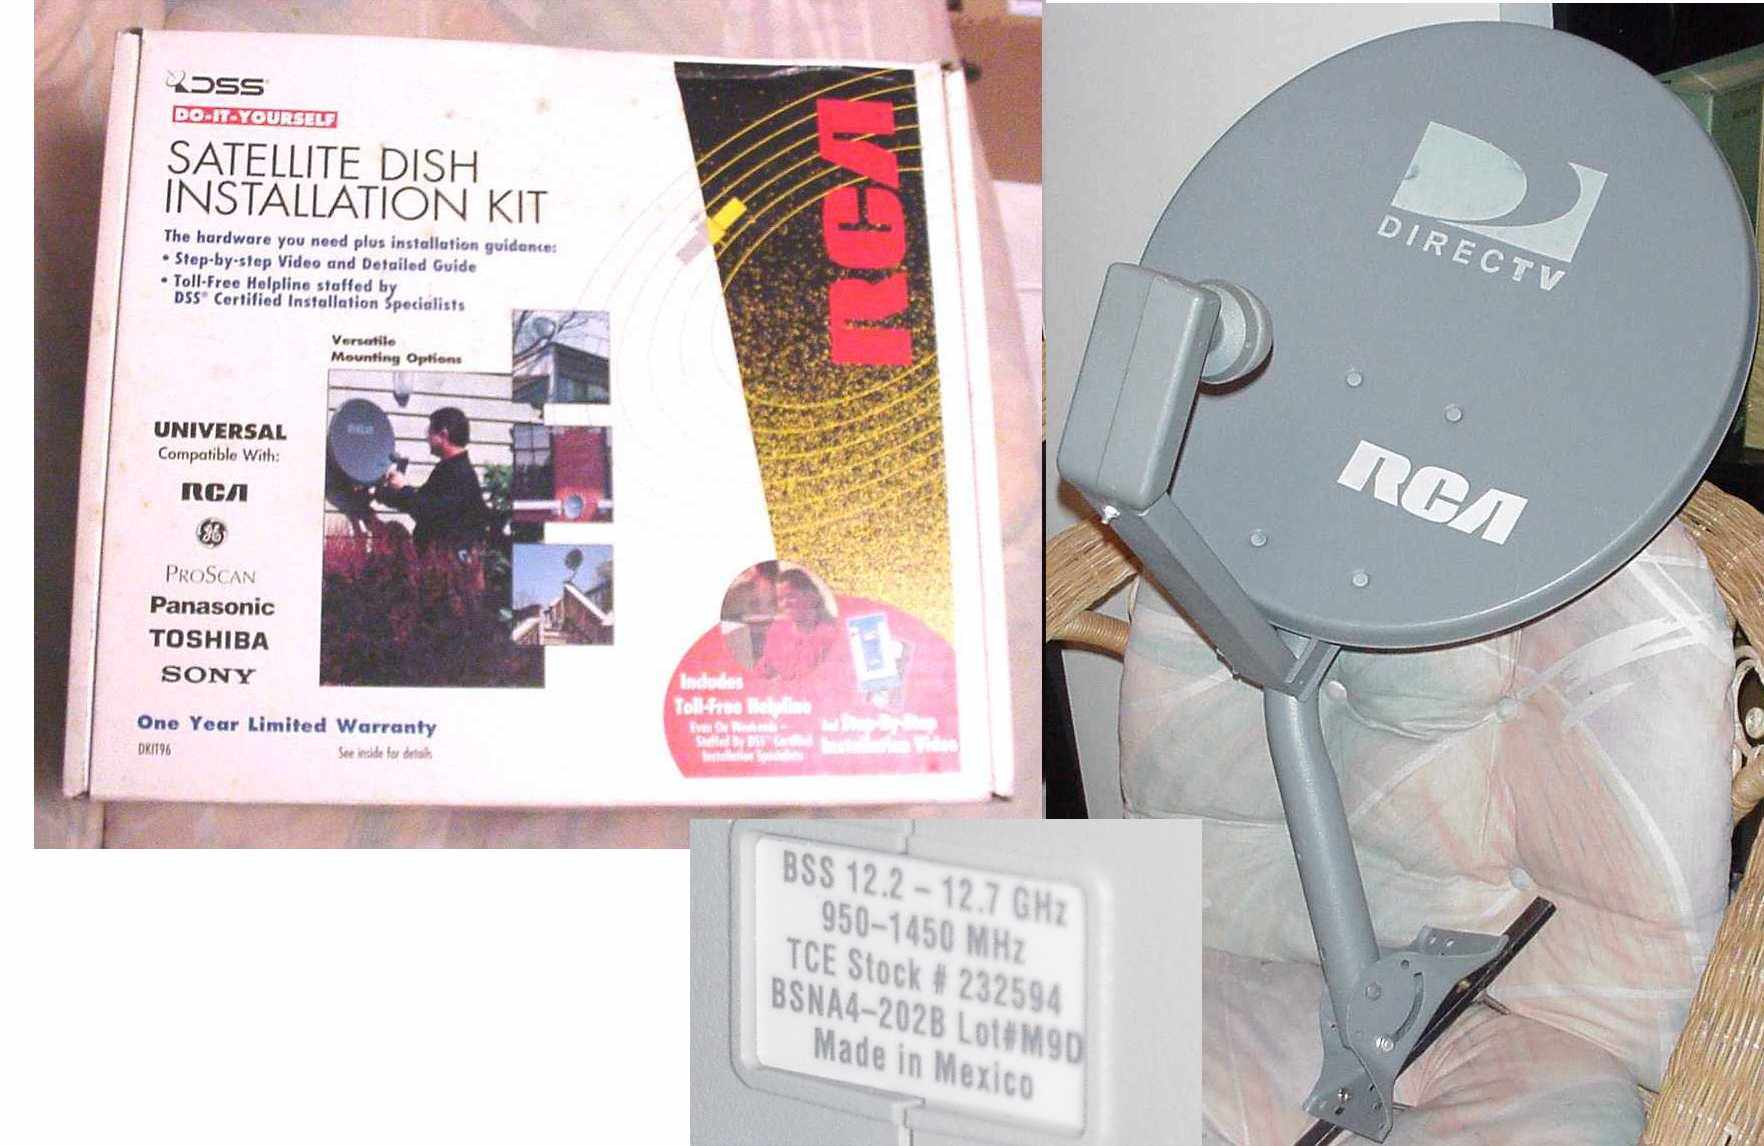 RCA Direct TV Satellite Dish and Installation Kit